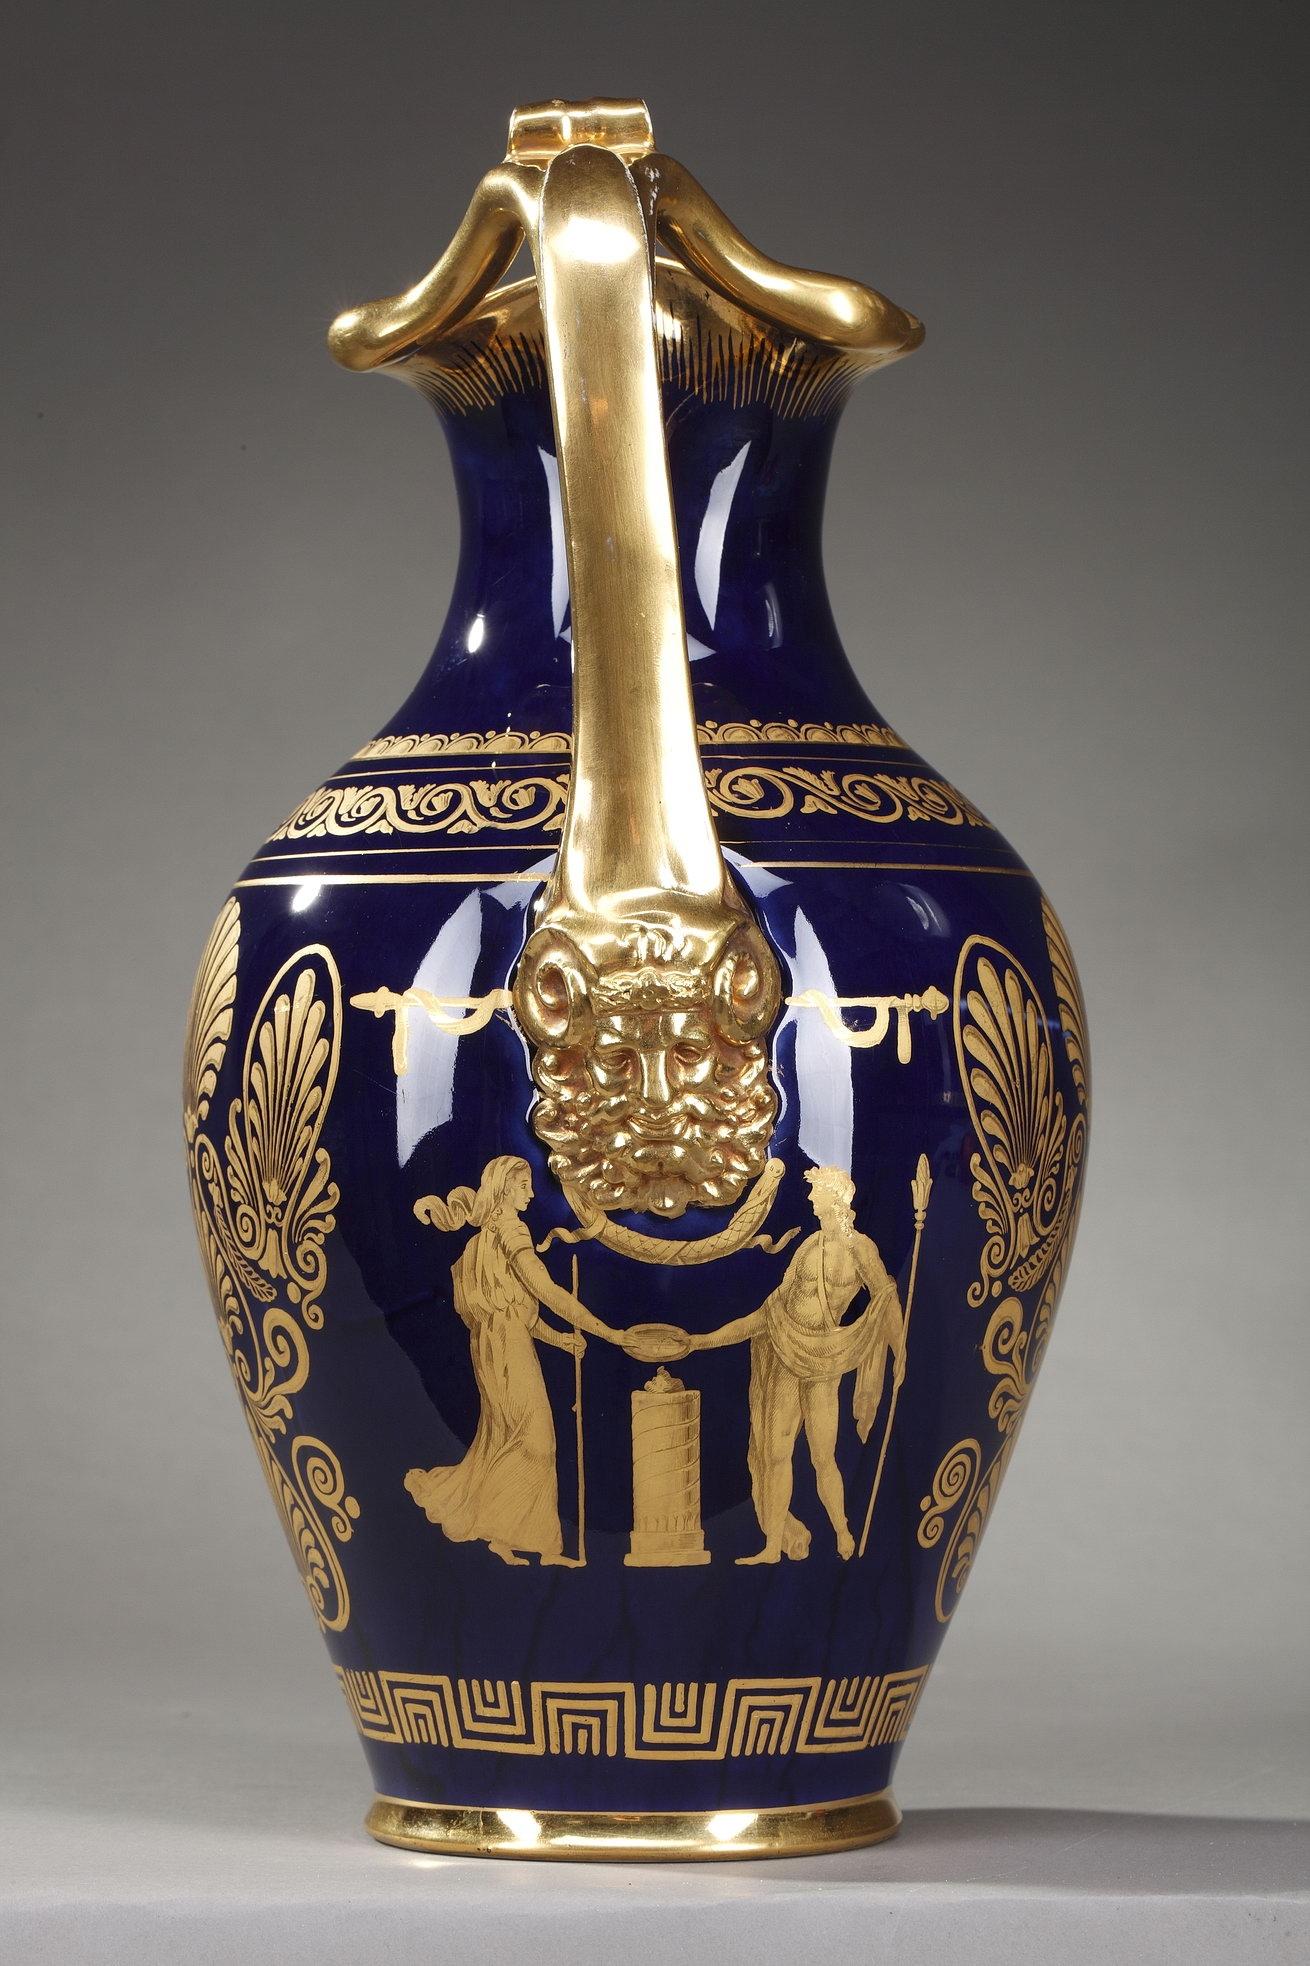 19th Century Empire Porcelain Ewer with Antique Decoration